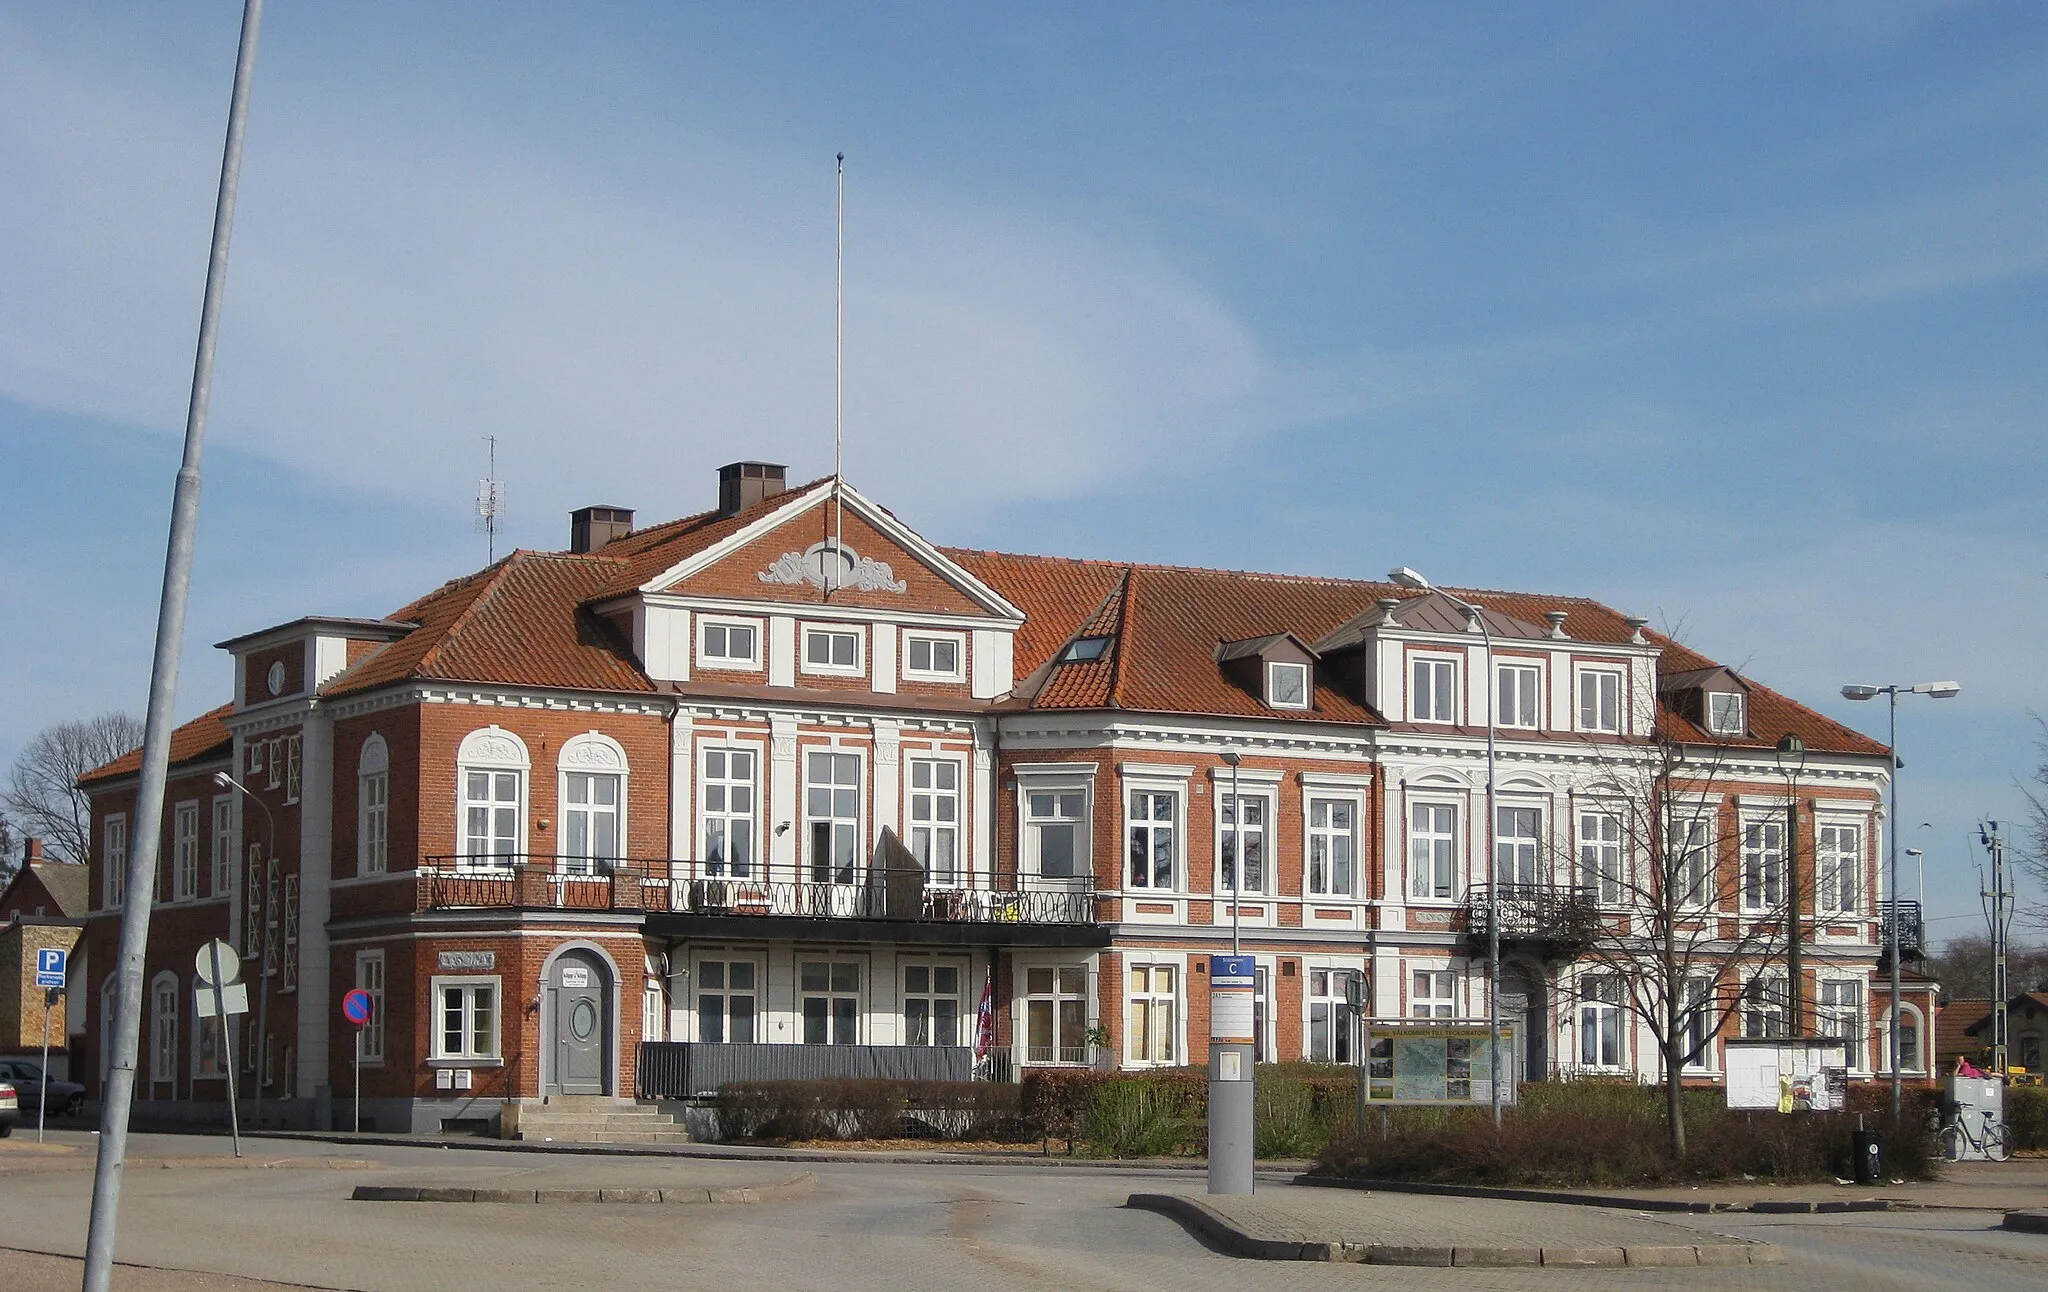 Photo showing: The former railroad hotel in Teckomatorp, Skåne, Sweden